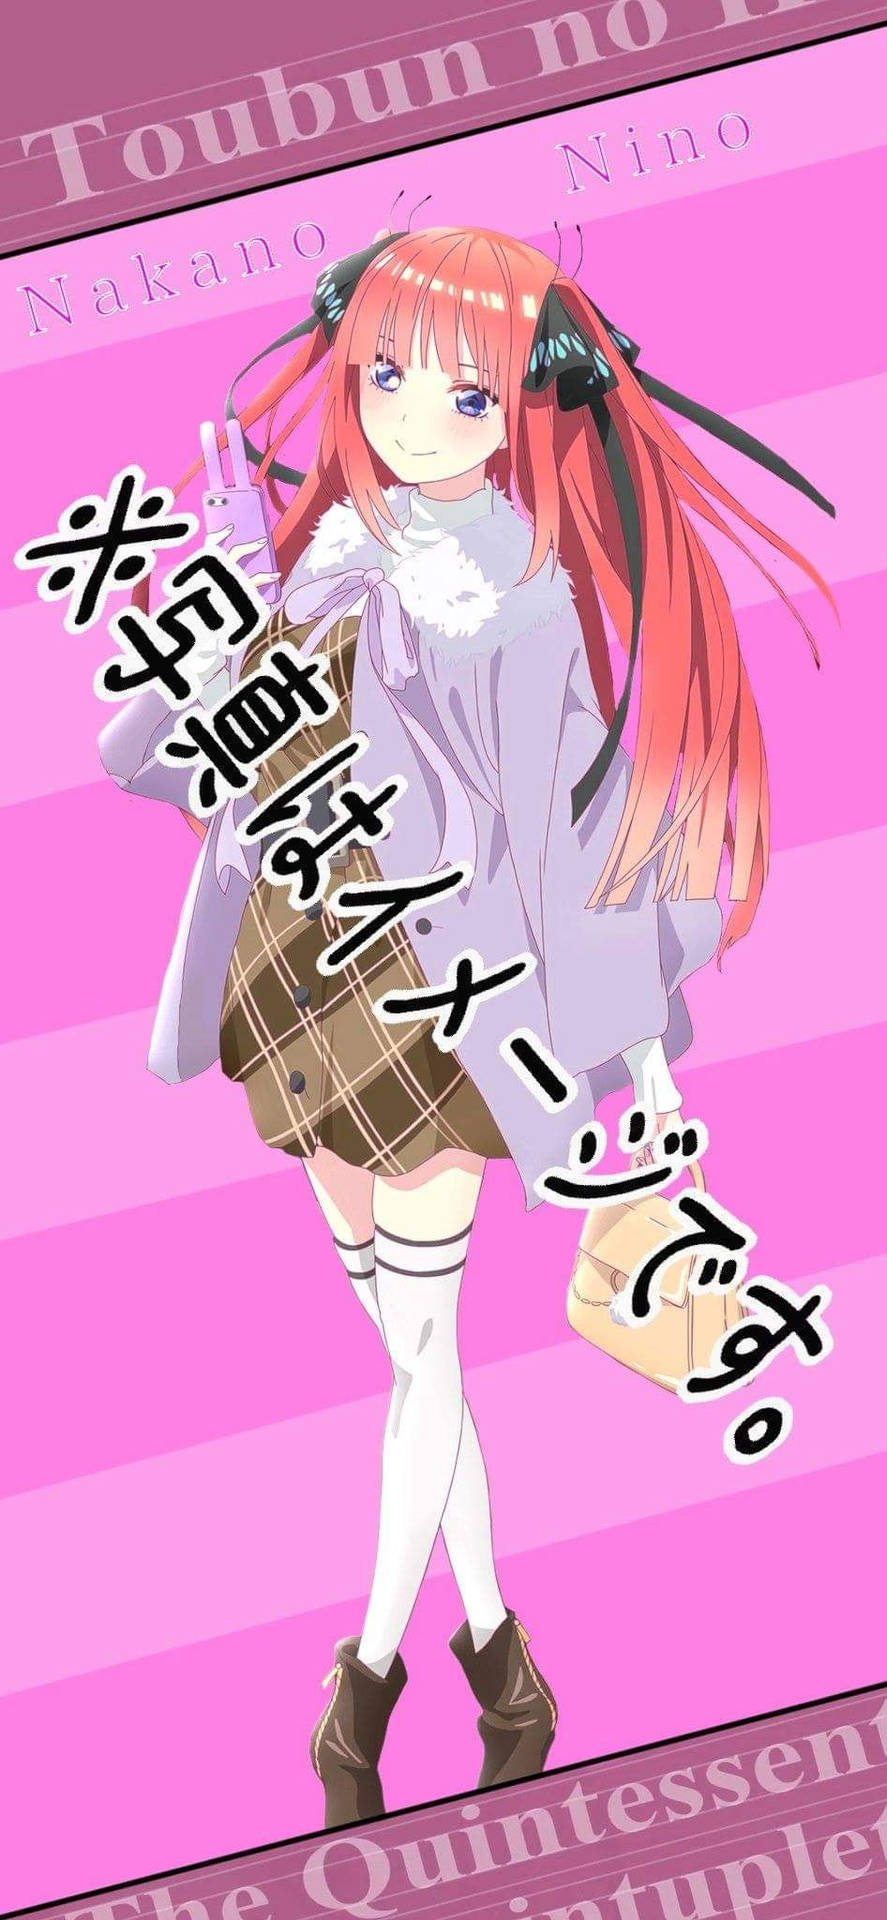 Tsundere Anime Girl Nino Nakano Background